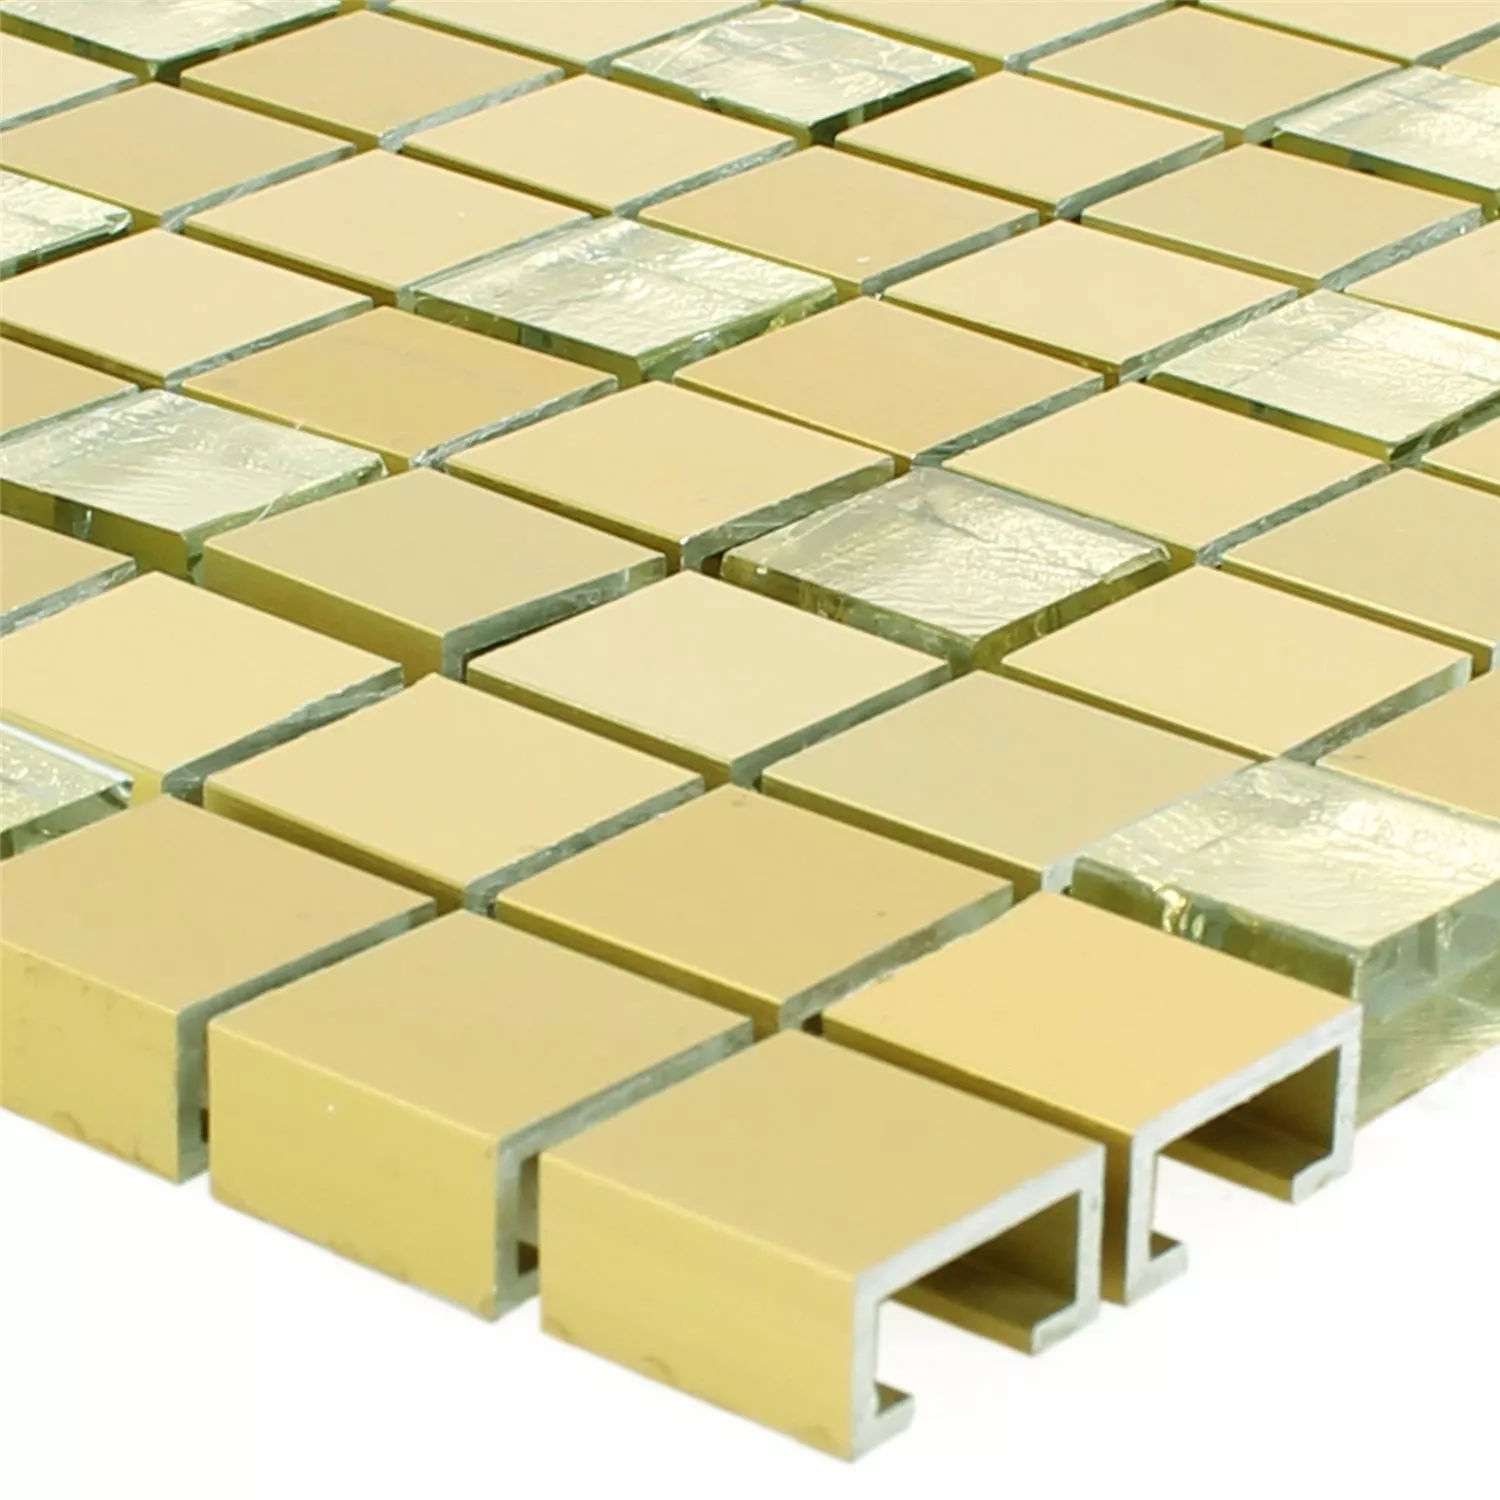 Mozaik Pločice Lissabon Aluminij Staklo Mix Zlatna